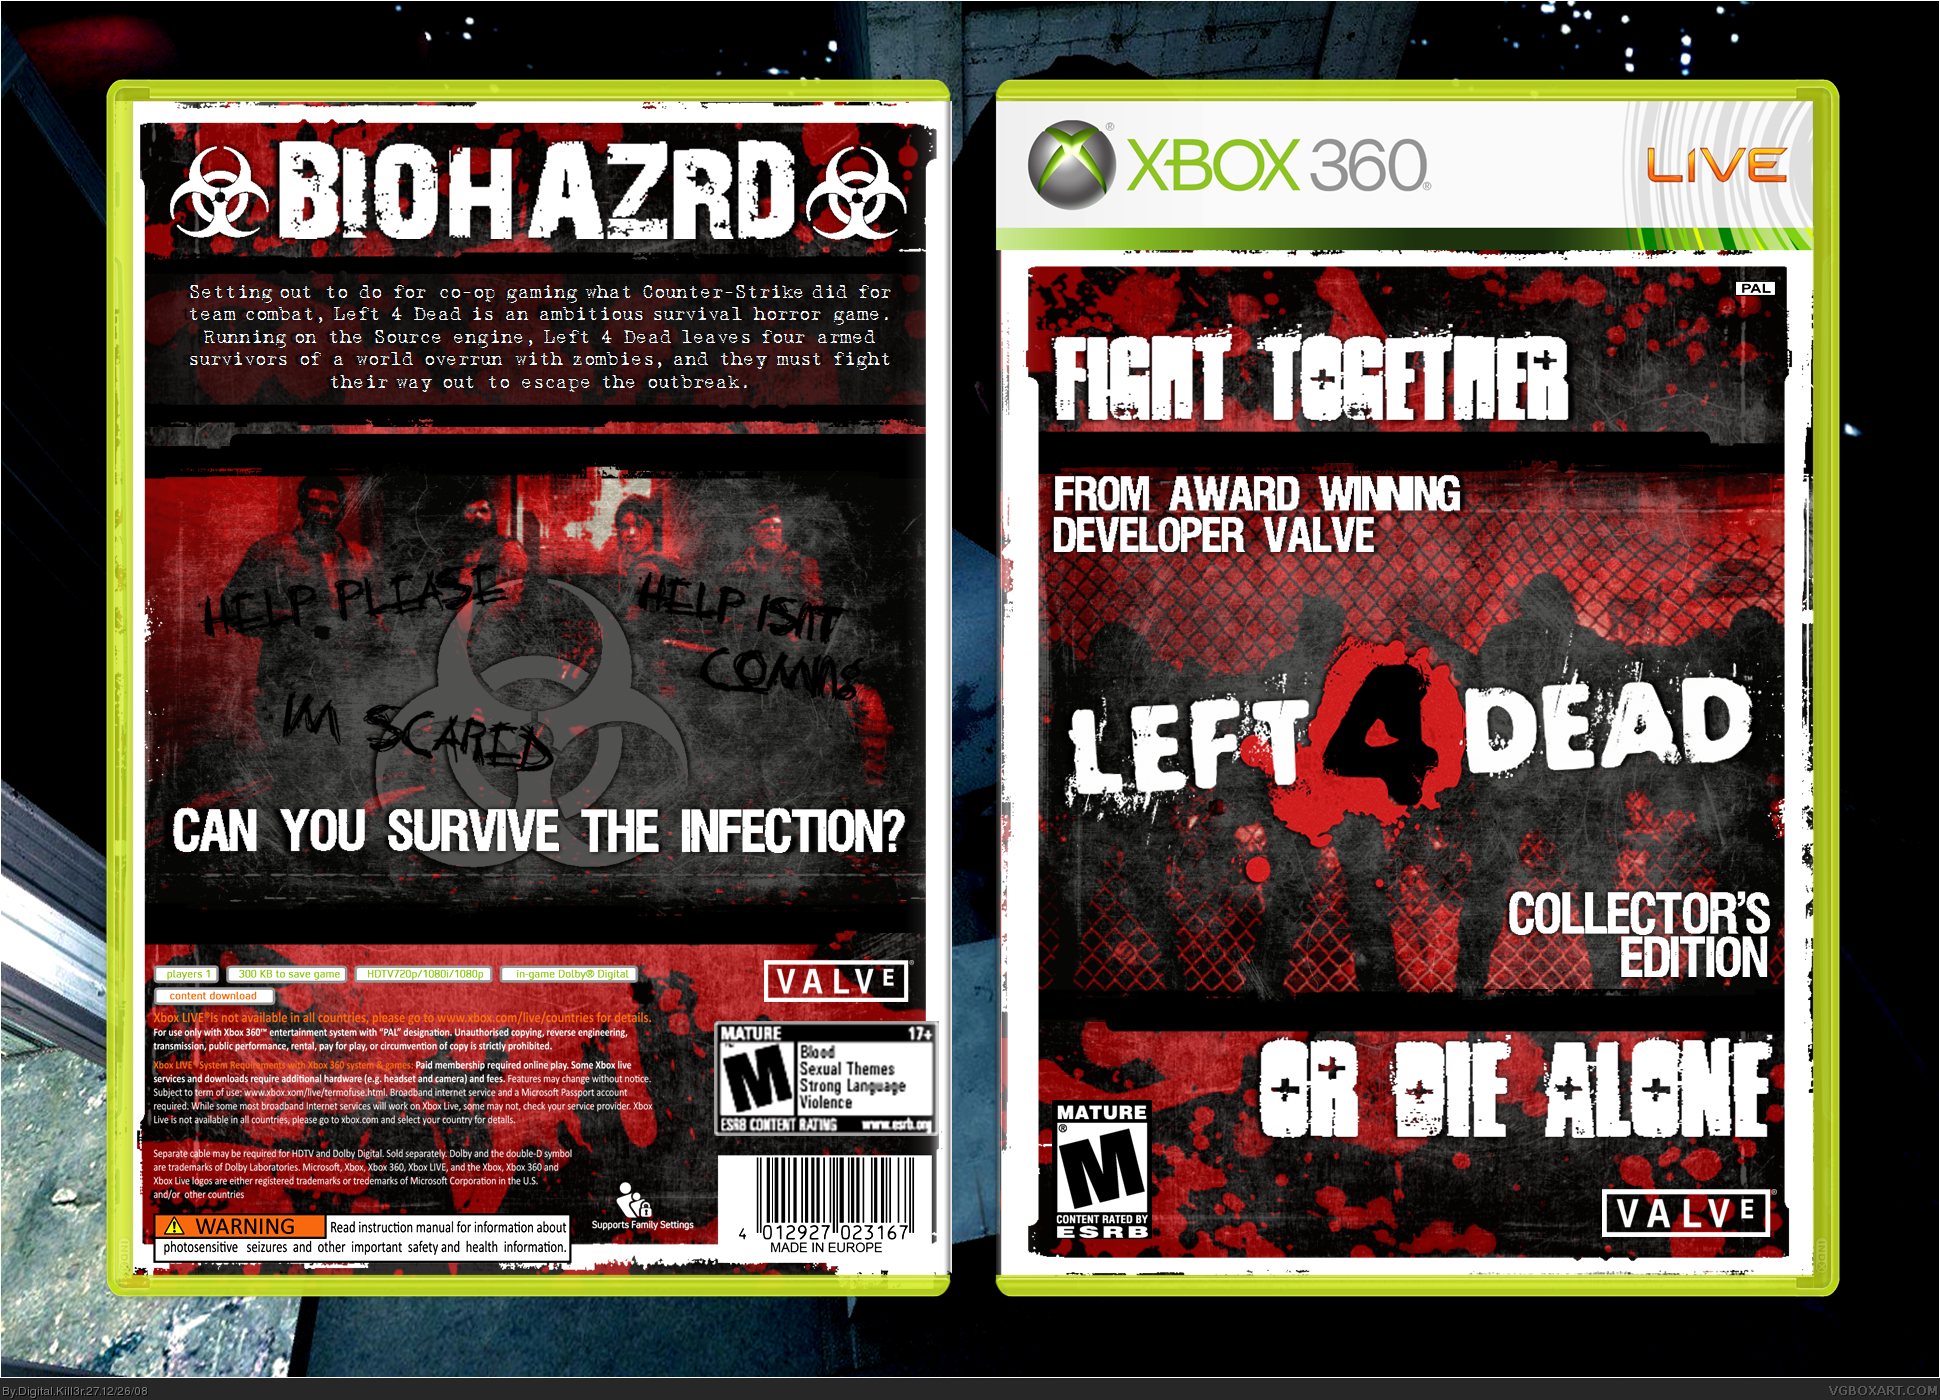 Left 4 Dead Collector's Edition box cover